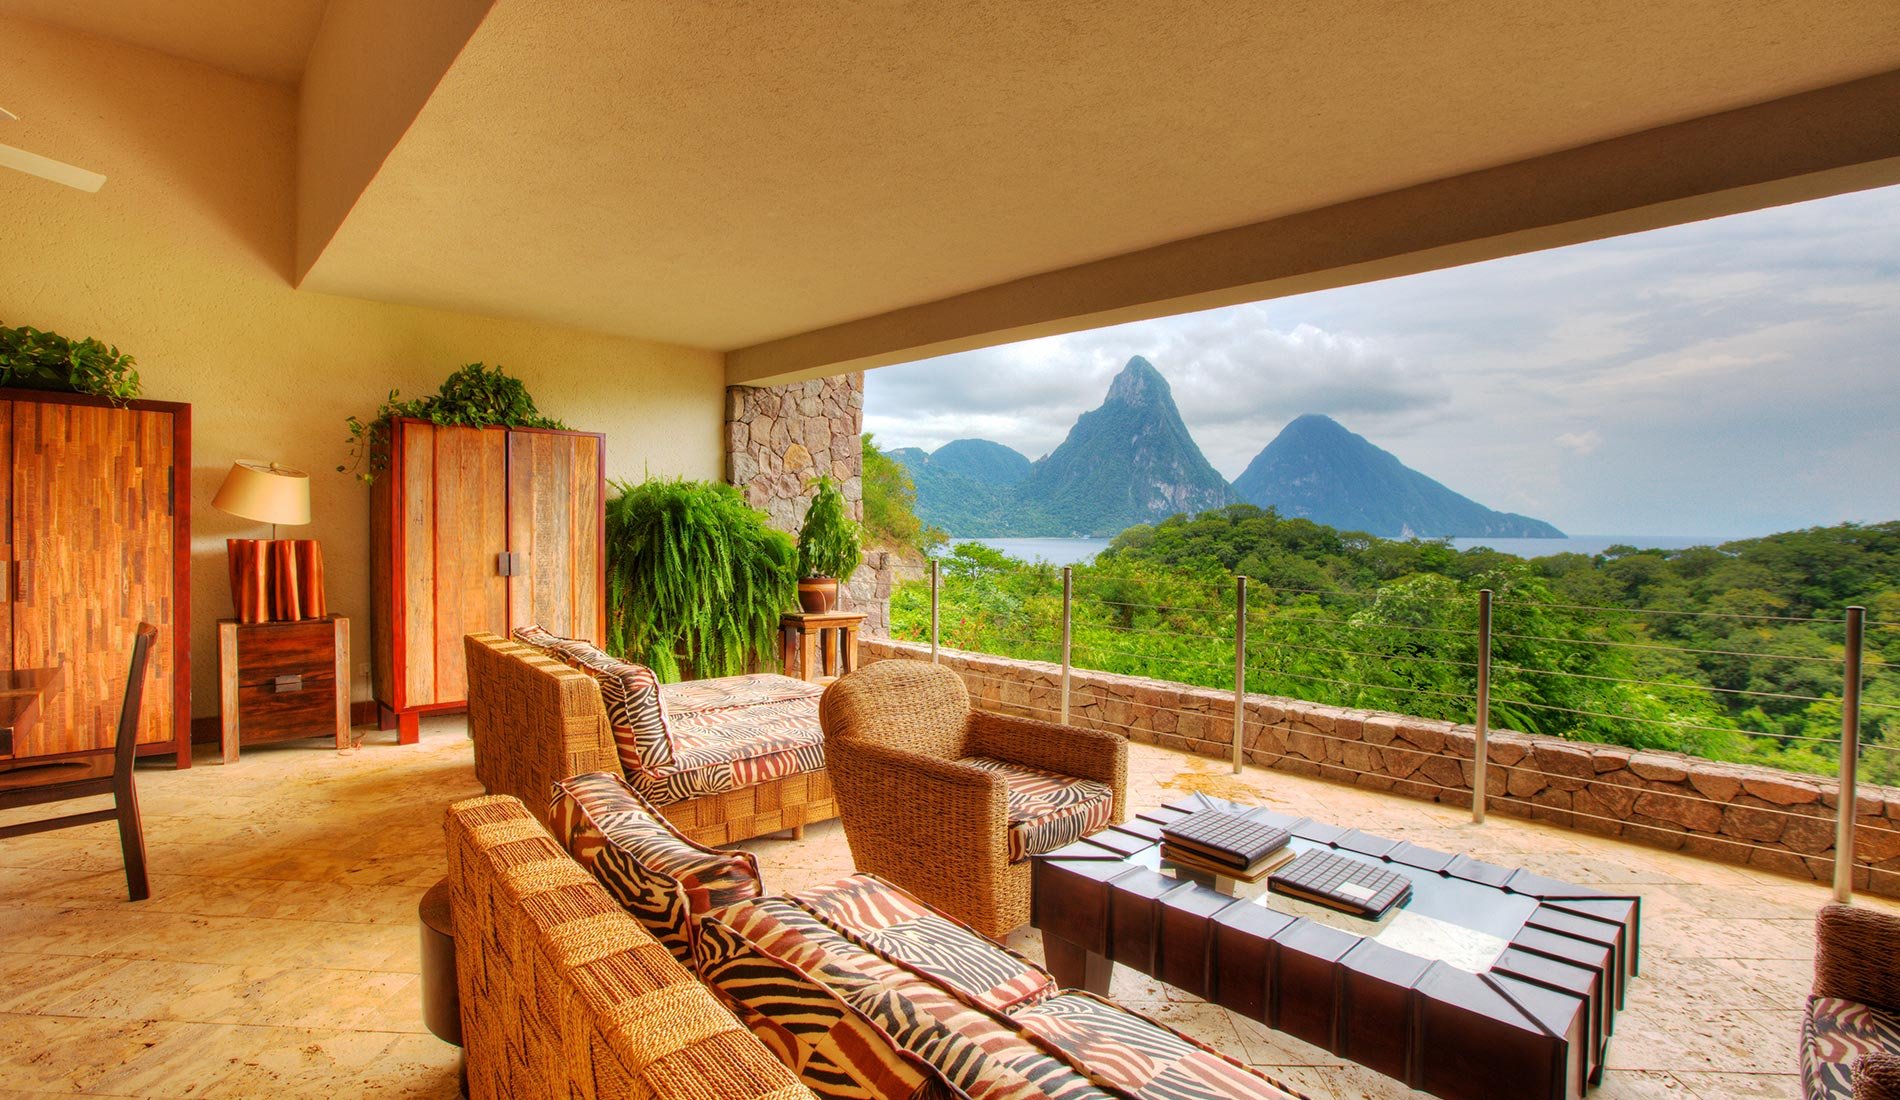 Luxury Hotel Jade Mountain resort 5 stars St Lucia caribbean island bedroom view